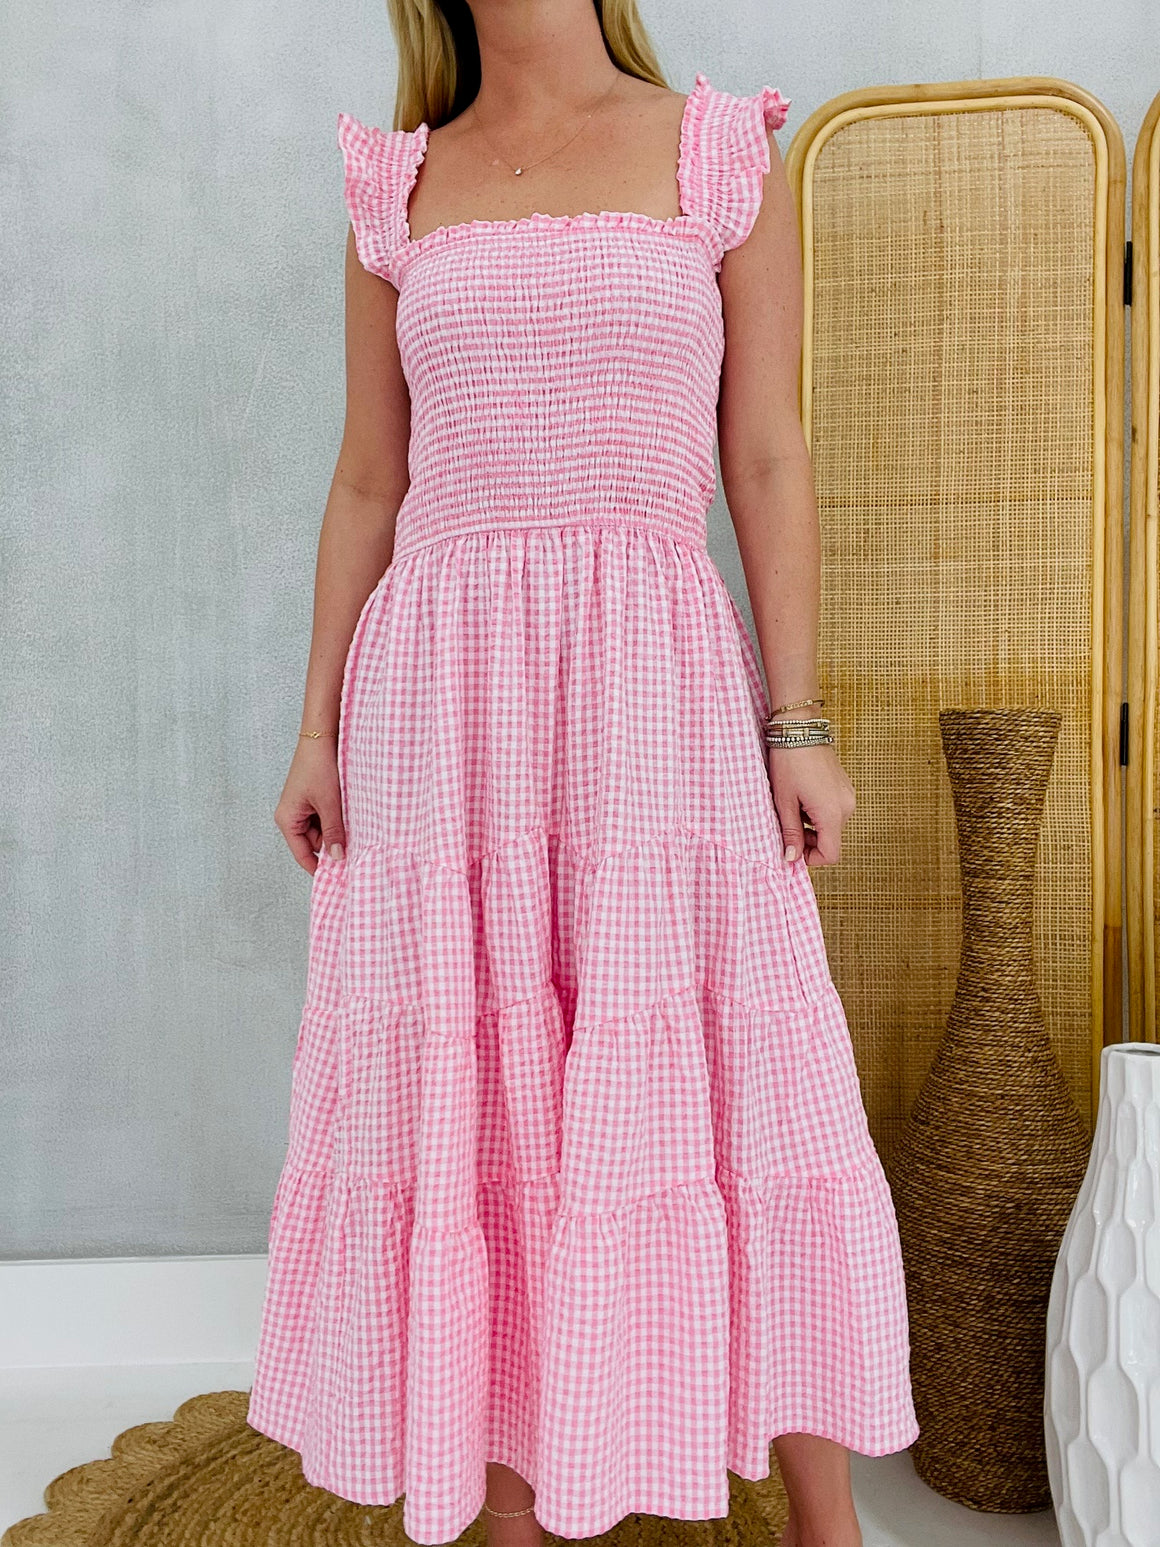 Between The Lines Midi Dress - Pink